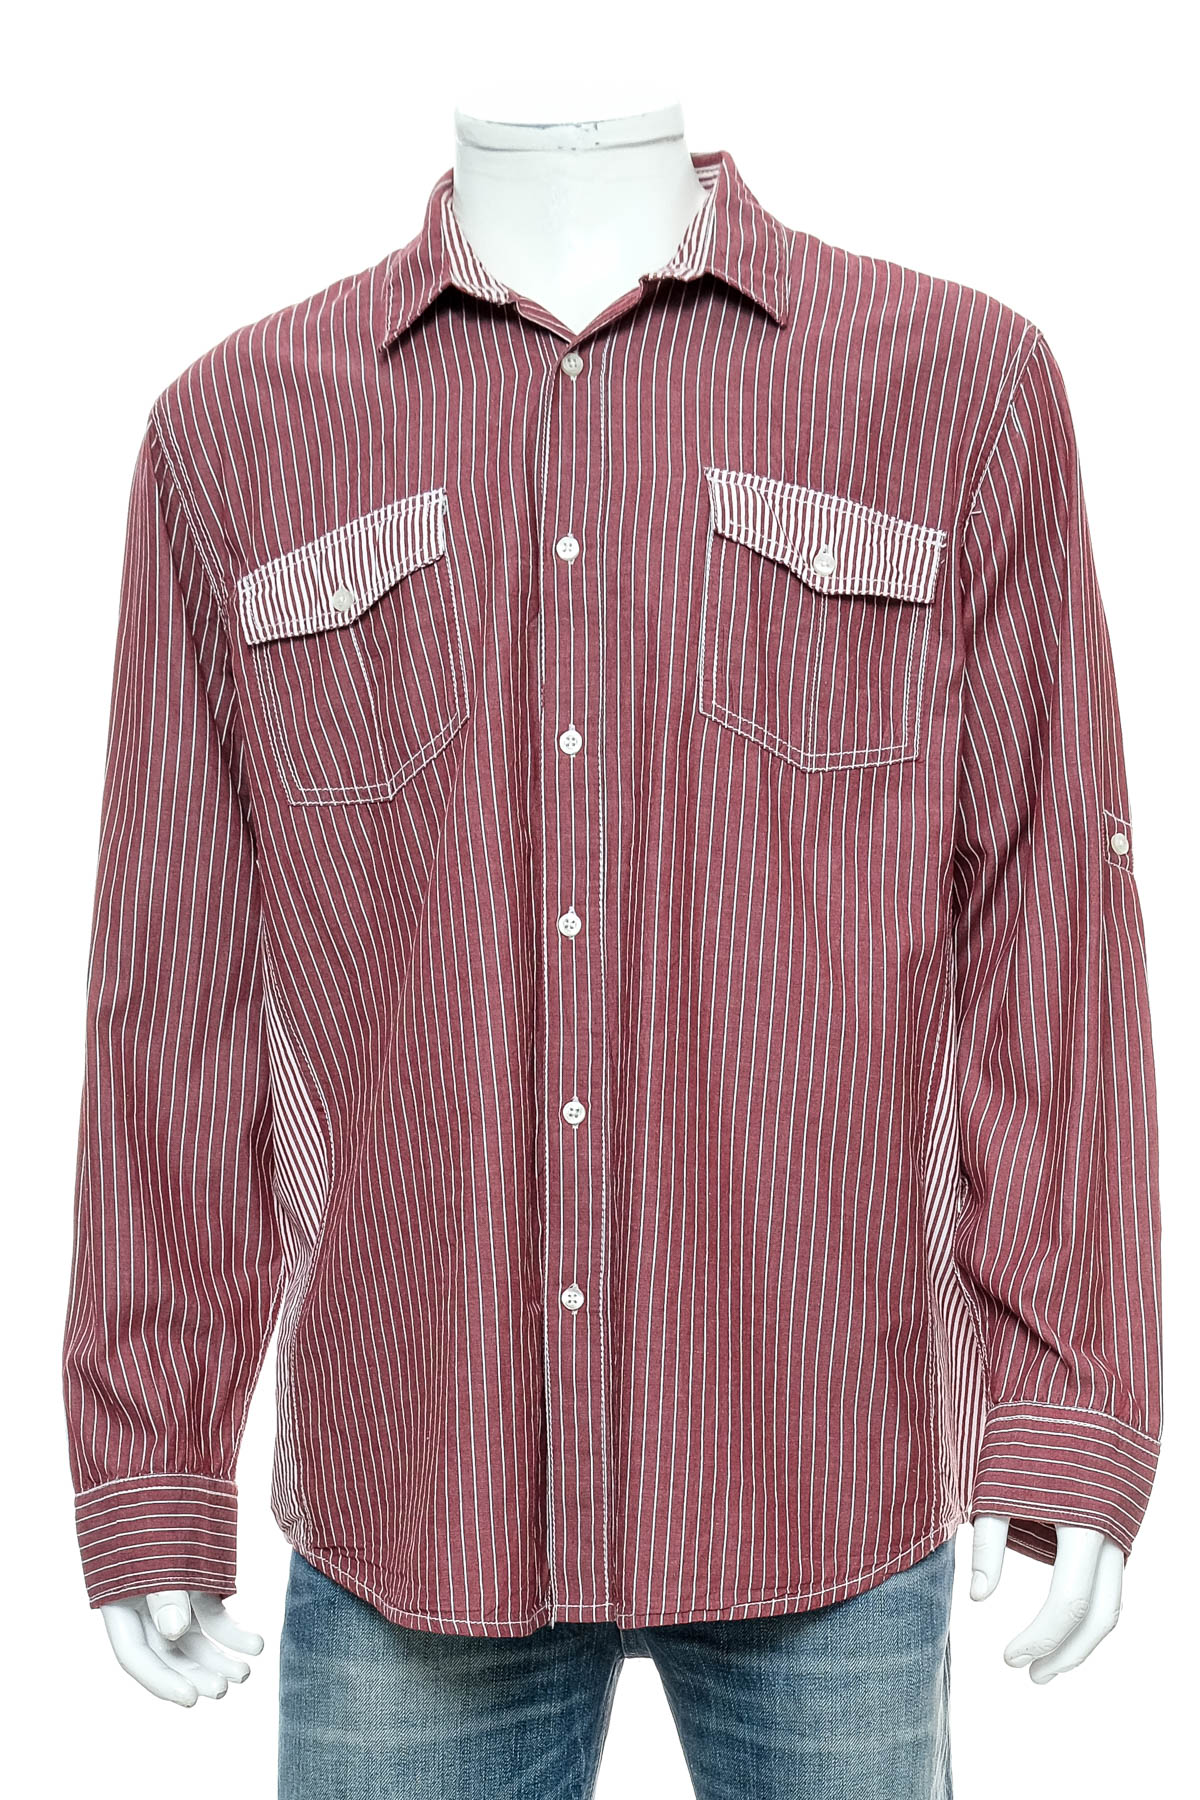 Men's shirt - American Rag Cie - 0